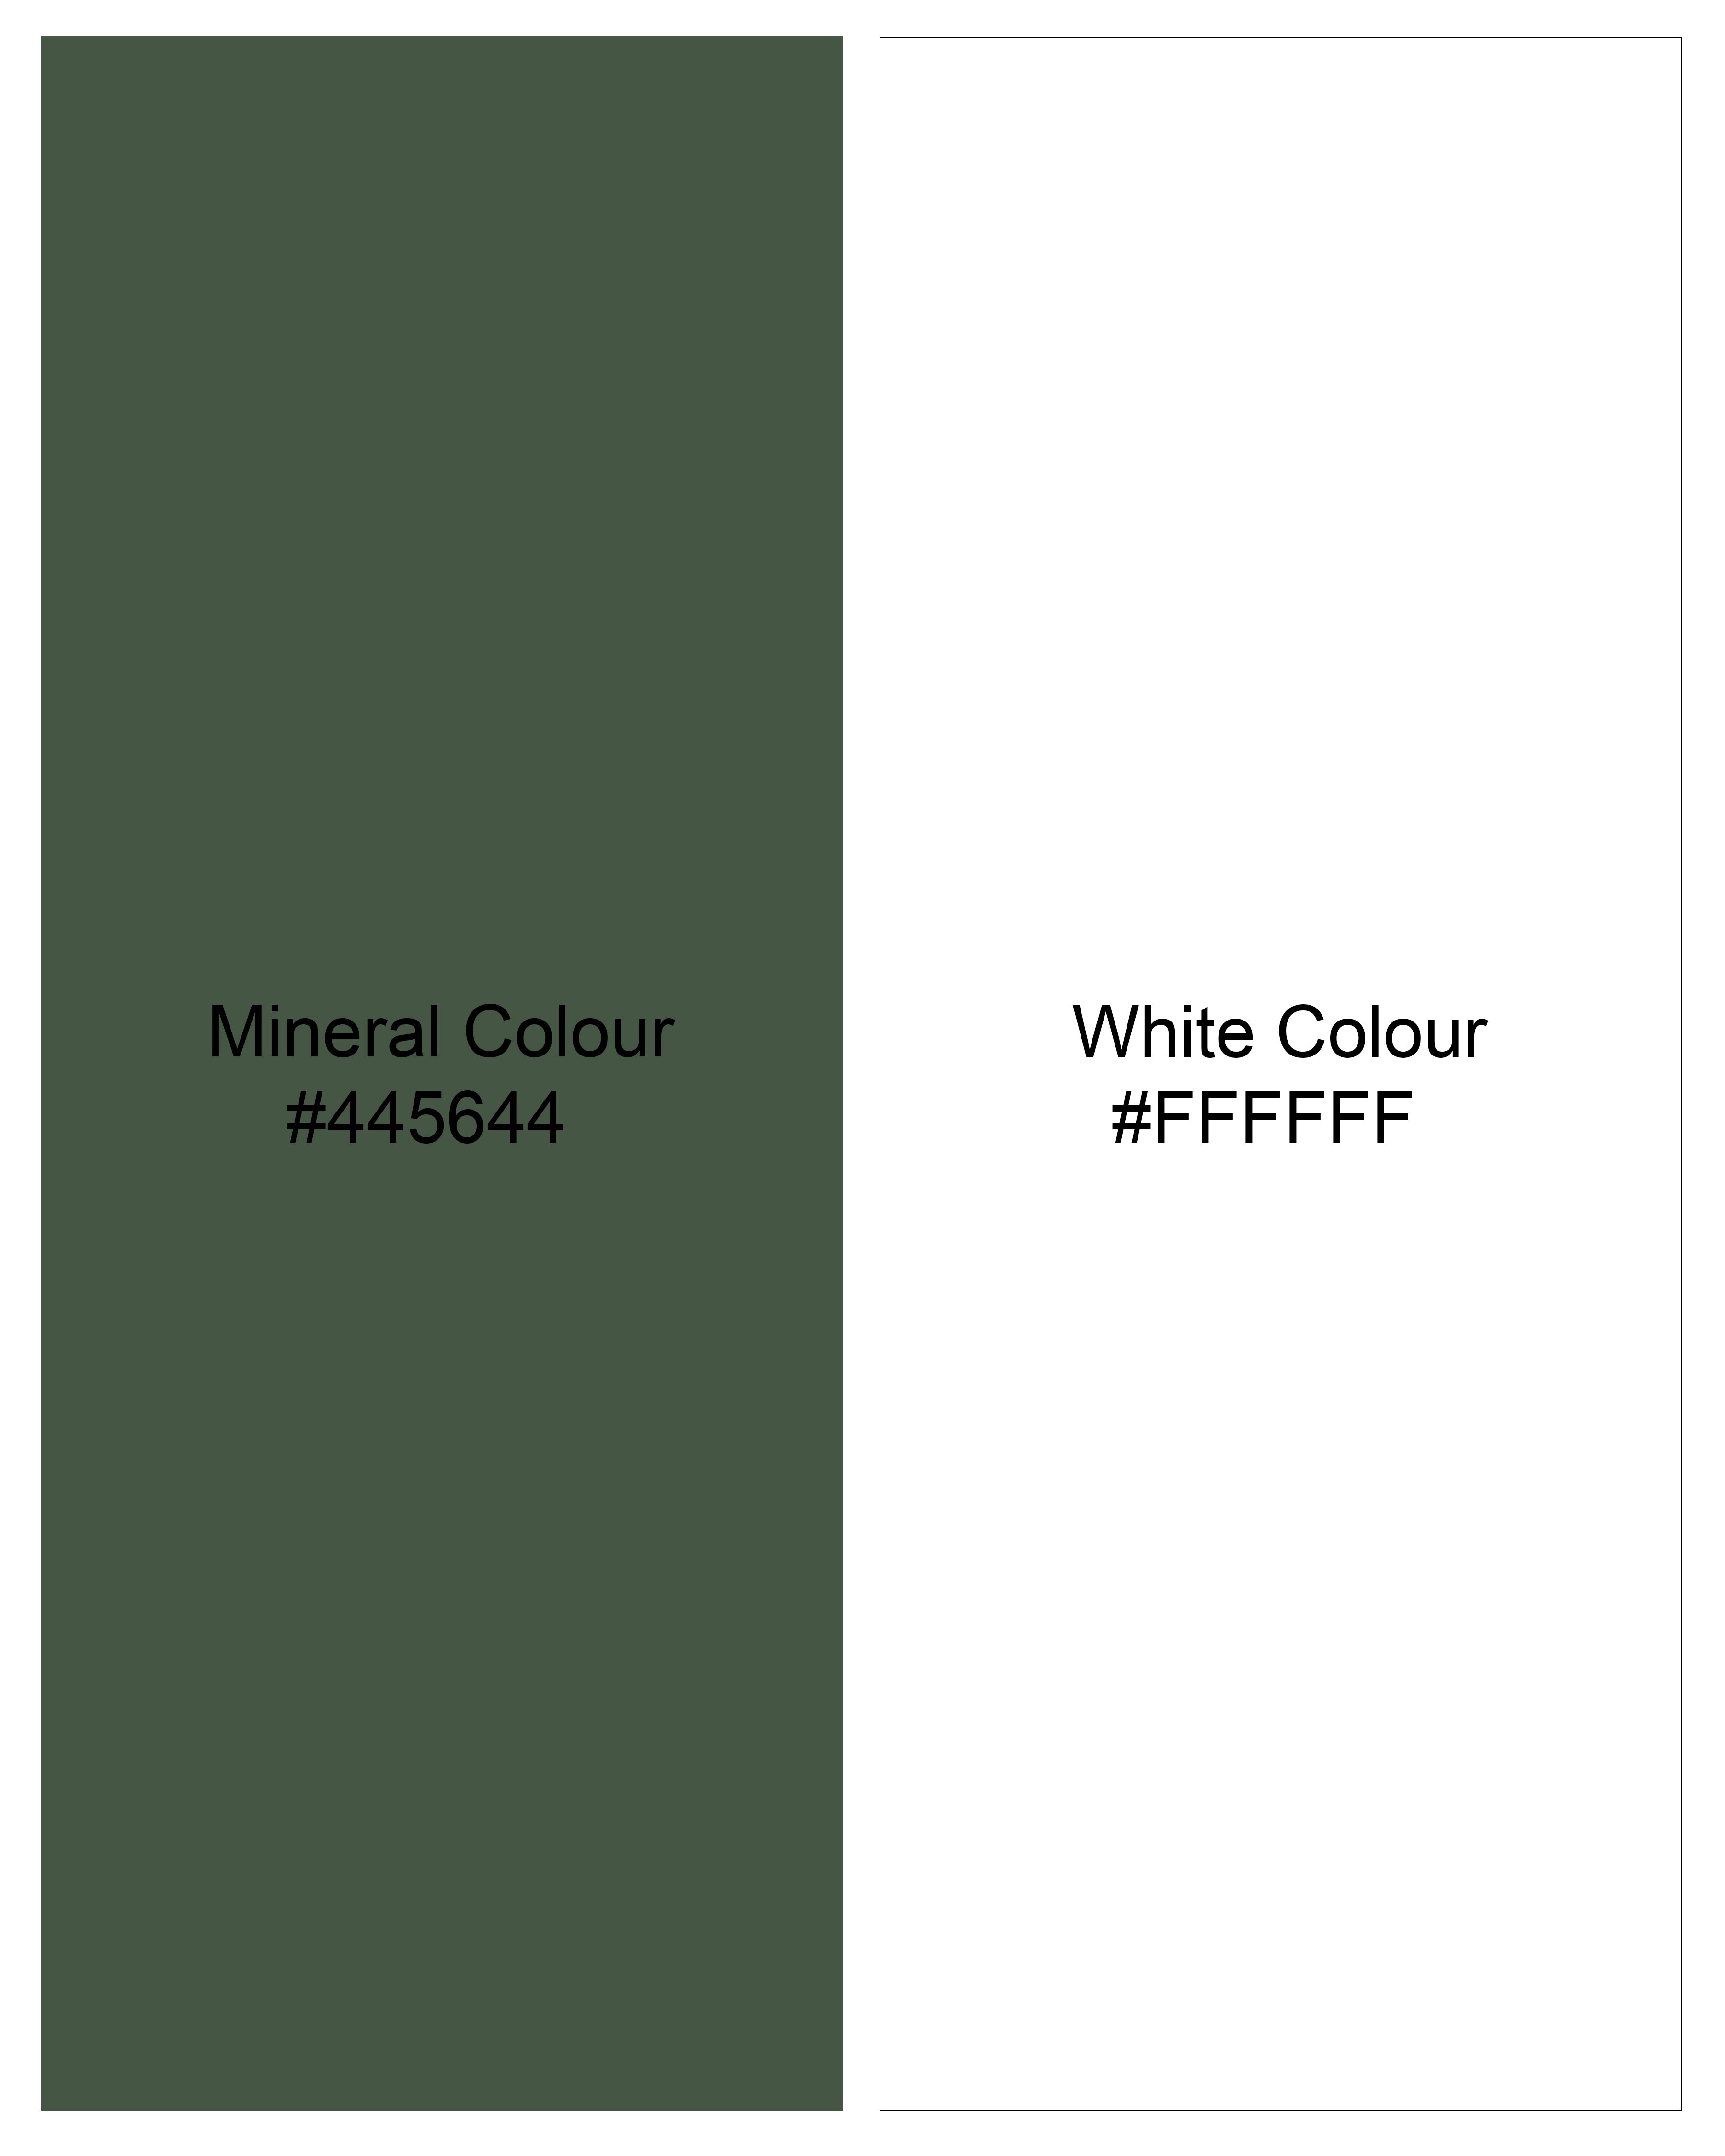 Mineral Green Printed Royal Oxford Shirt 10158-BD-38, 10158-BD-H-38, 10158-BD-39, 10158-BD-H-39, 10158-BD-40, 10158-BD-H-40, 10158-BD-42, 10158-BD-H-42, 10158-BD-44, 10158-BD-H-44, 10158-BD-46, 10158-BD-H-46, 10158-BD-48, 10158-BD-H-48, 10158-BD-50, 10158-BD-H-50, 10158-BD-52, 10158-BD-H-52